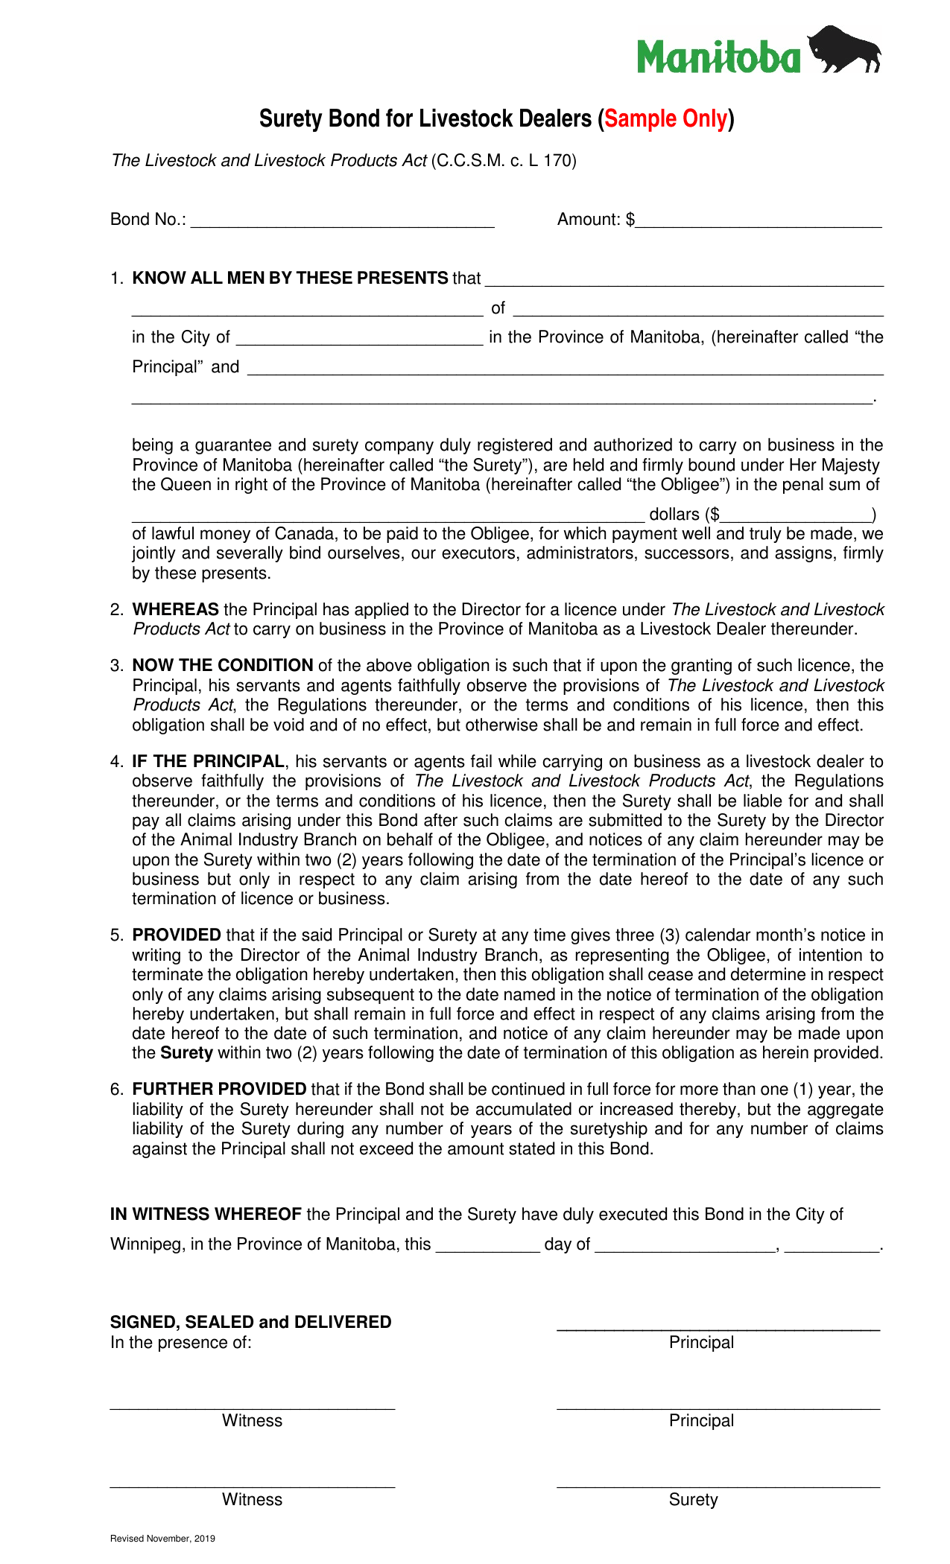 Surety Bond for Livestock Dealers - Sample - Manitoba, Canada, Page 1